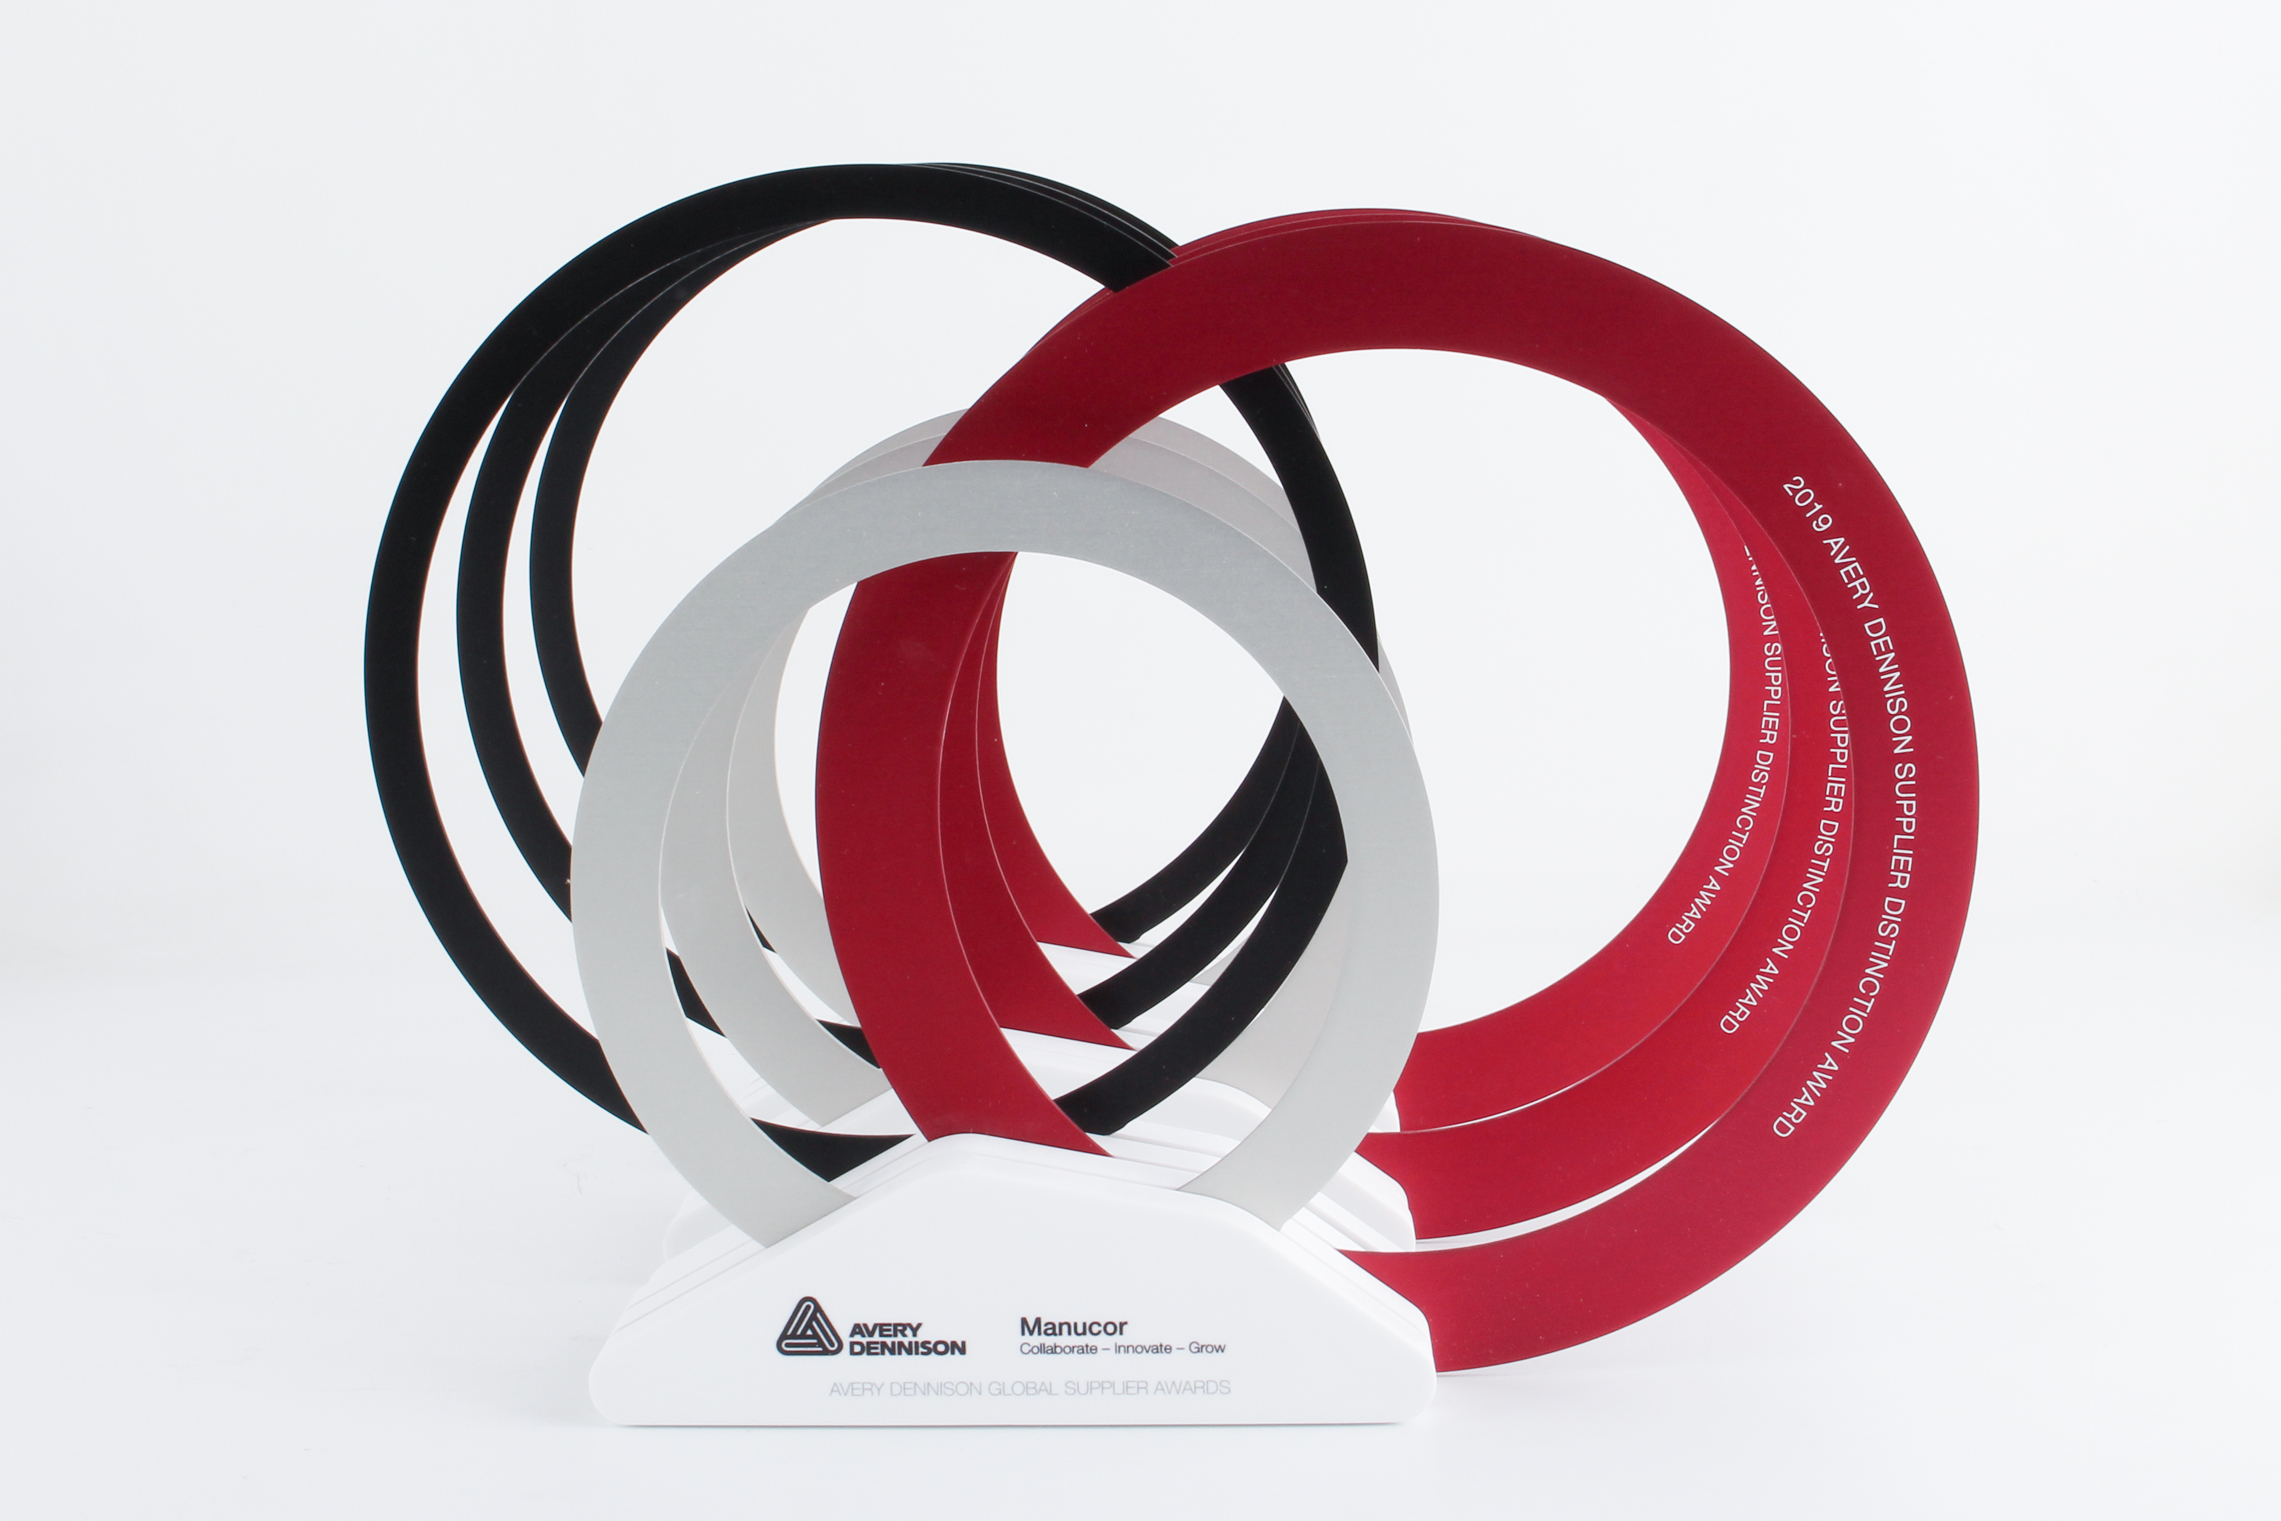 avery dennison custom awards trophies ring circle design not glass